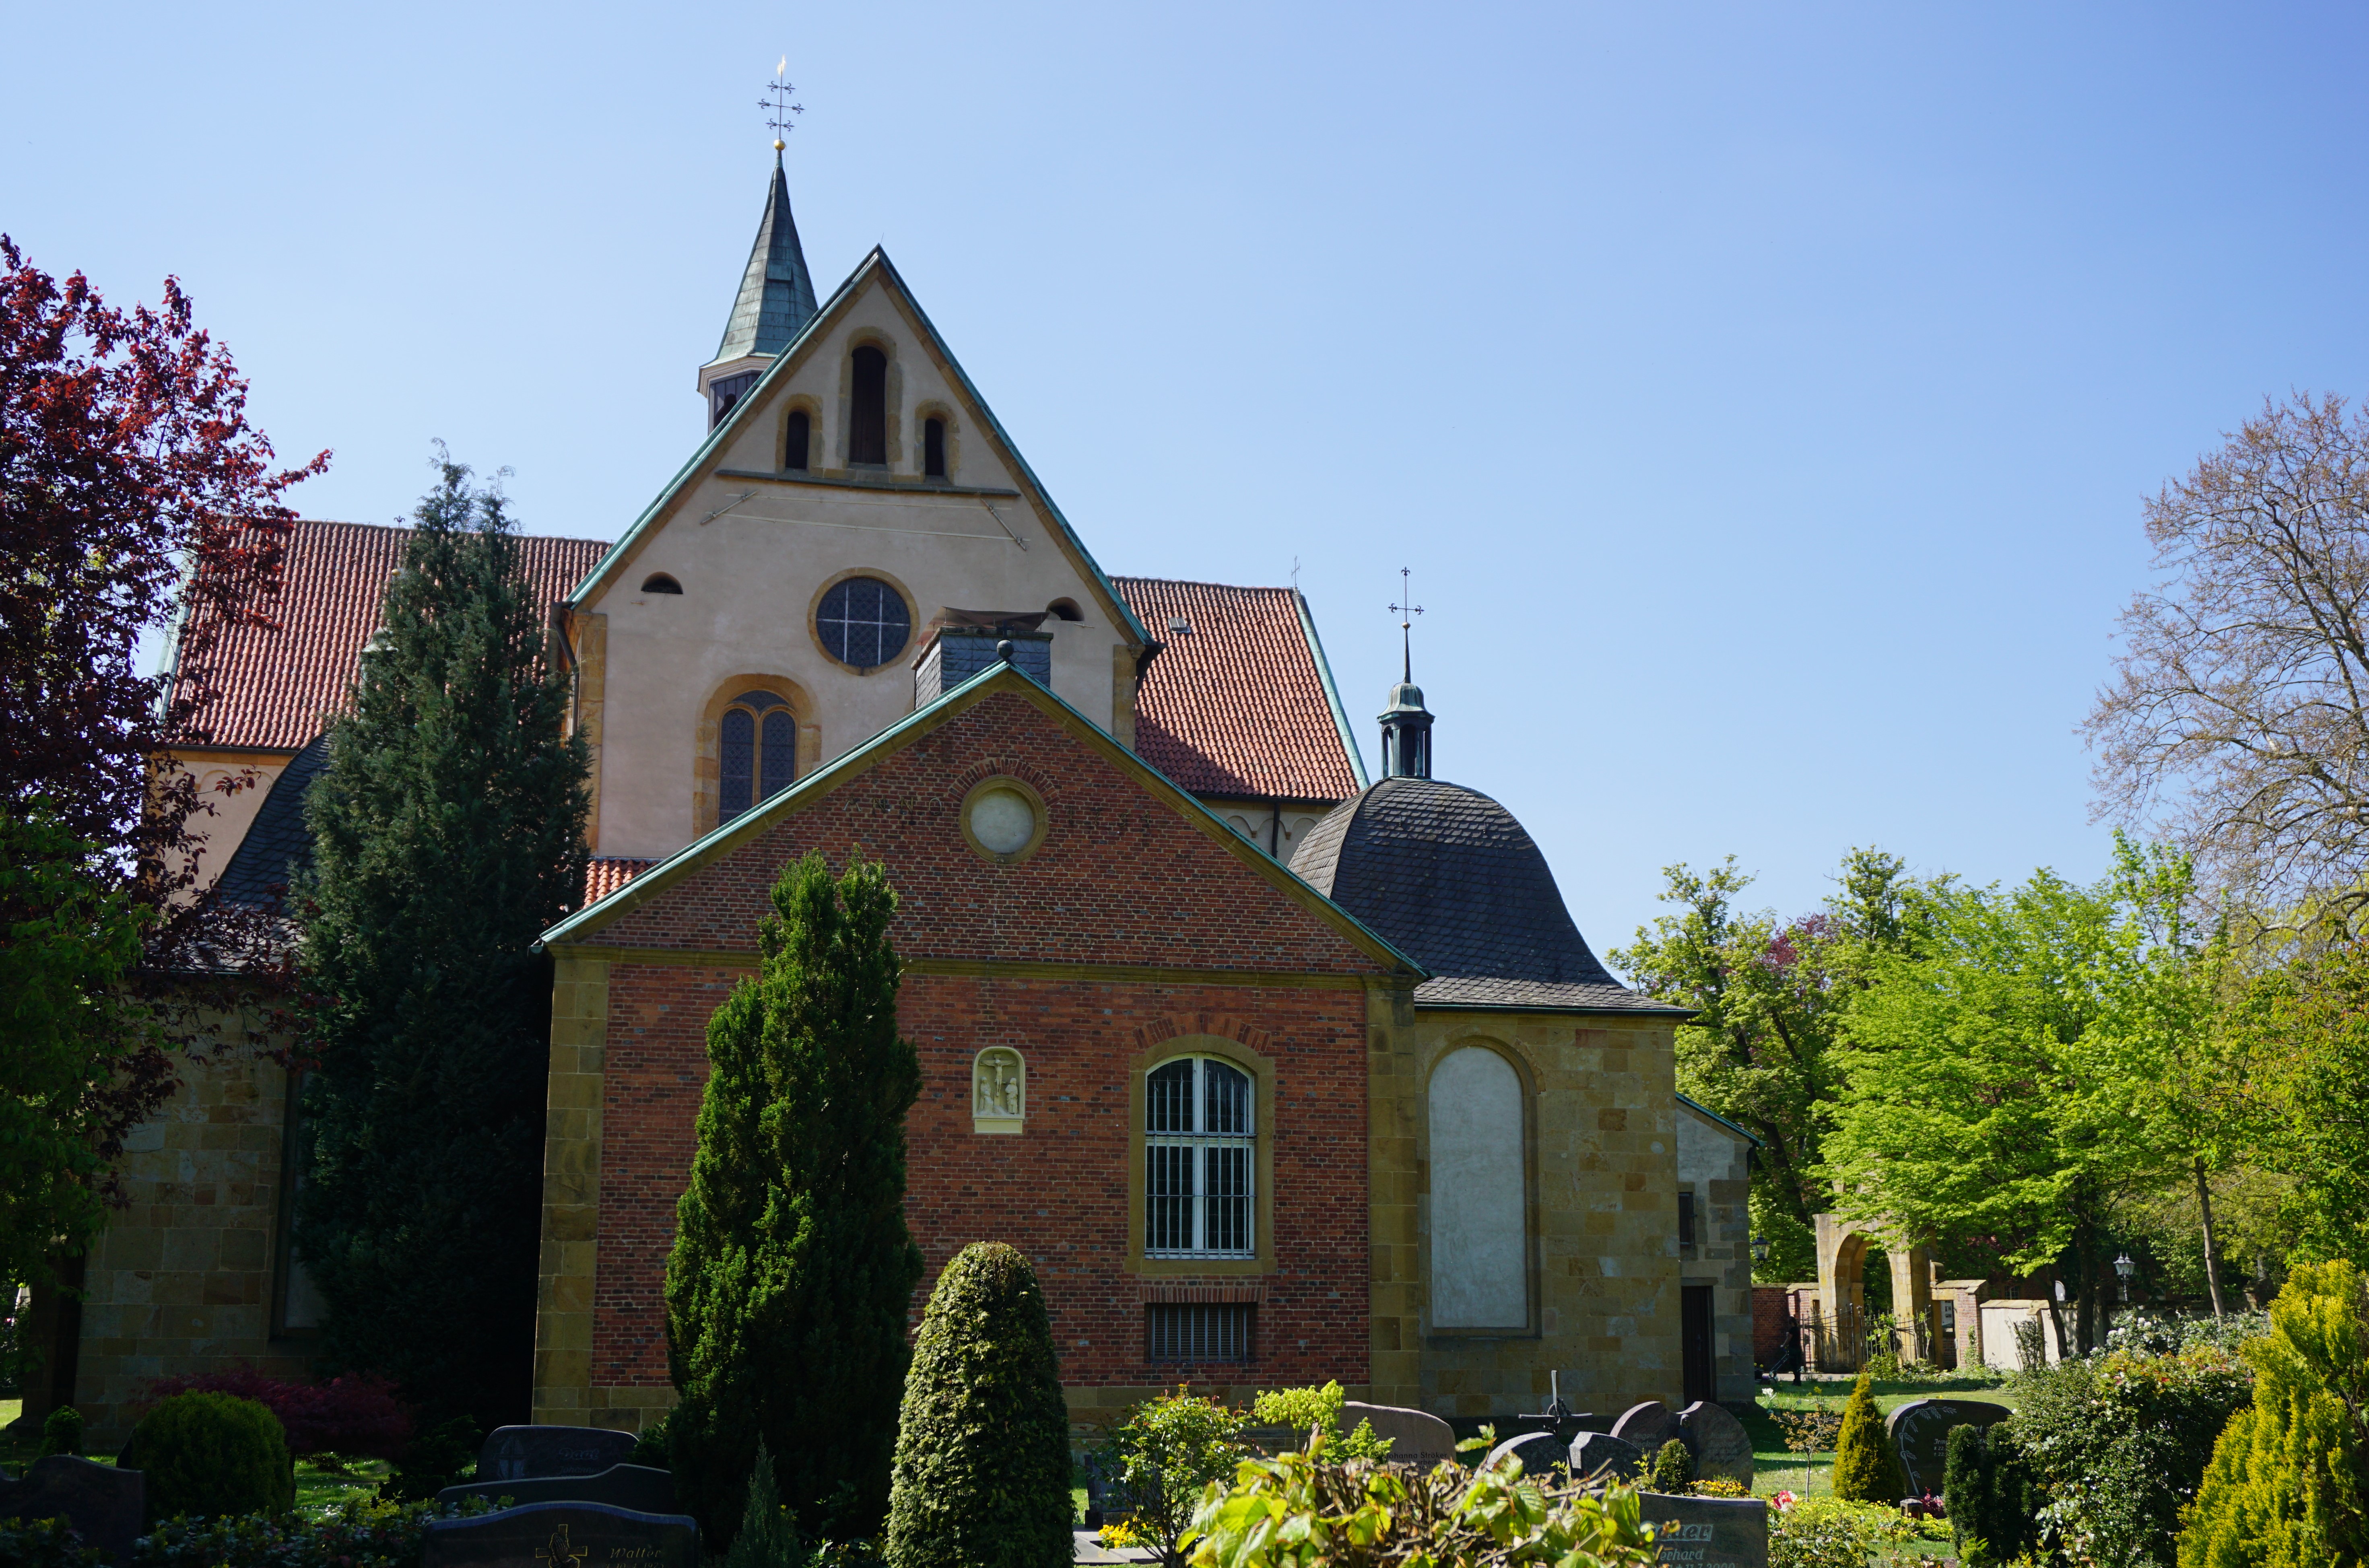 Abteikirche Marienfeld, Harsewinkel.
